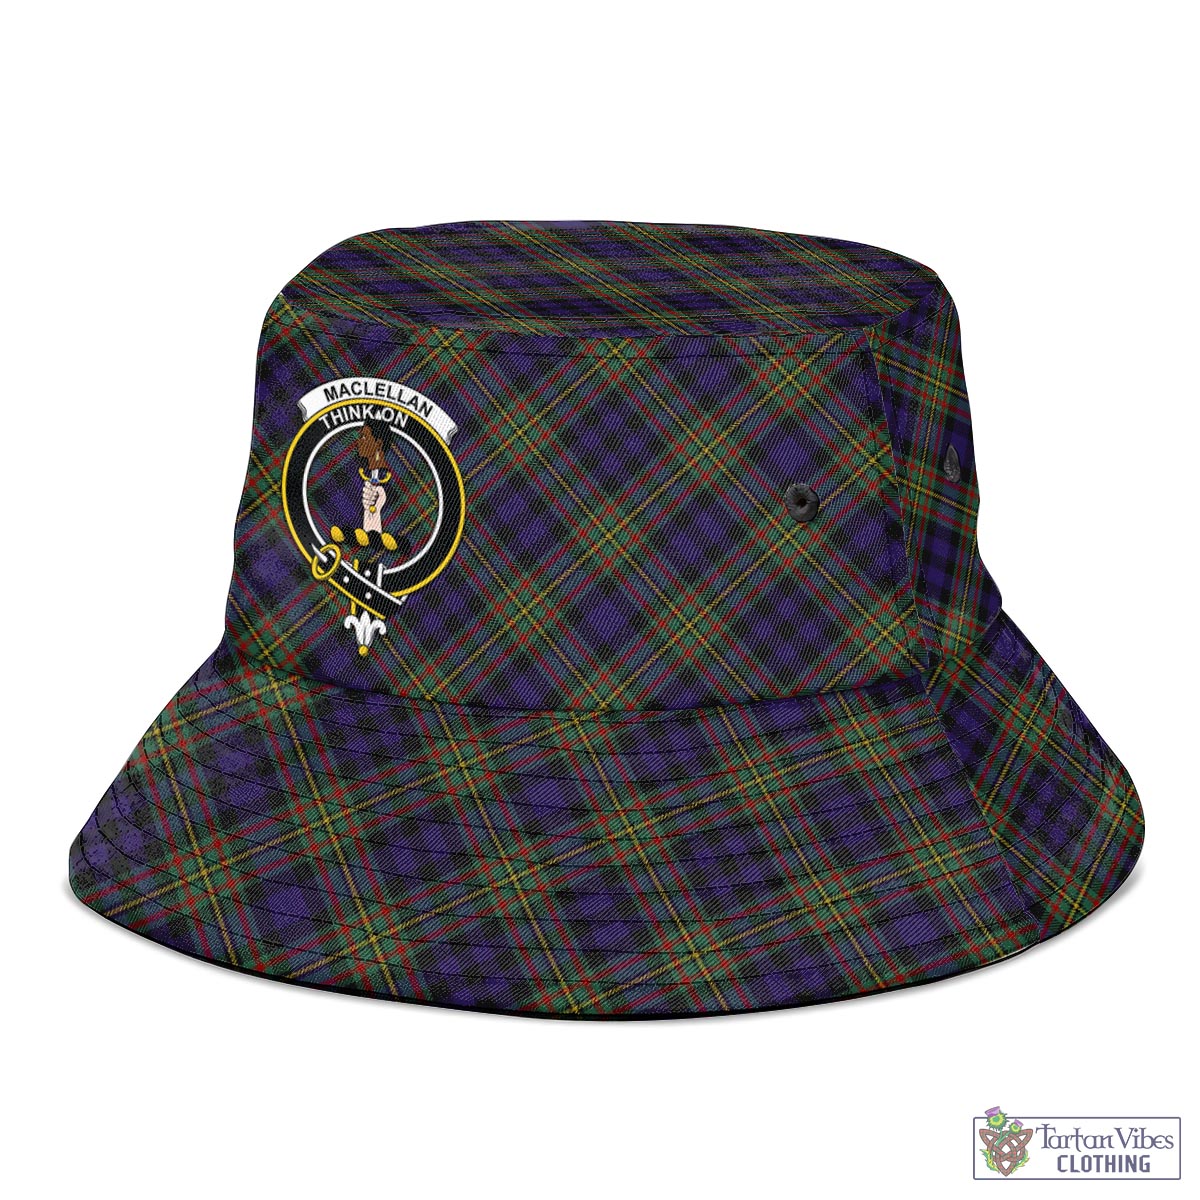 Tartan Vibes Clothing MacLellan Tartan Bucket Hat with Family Crest